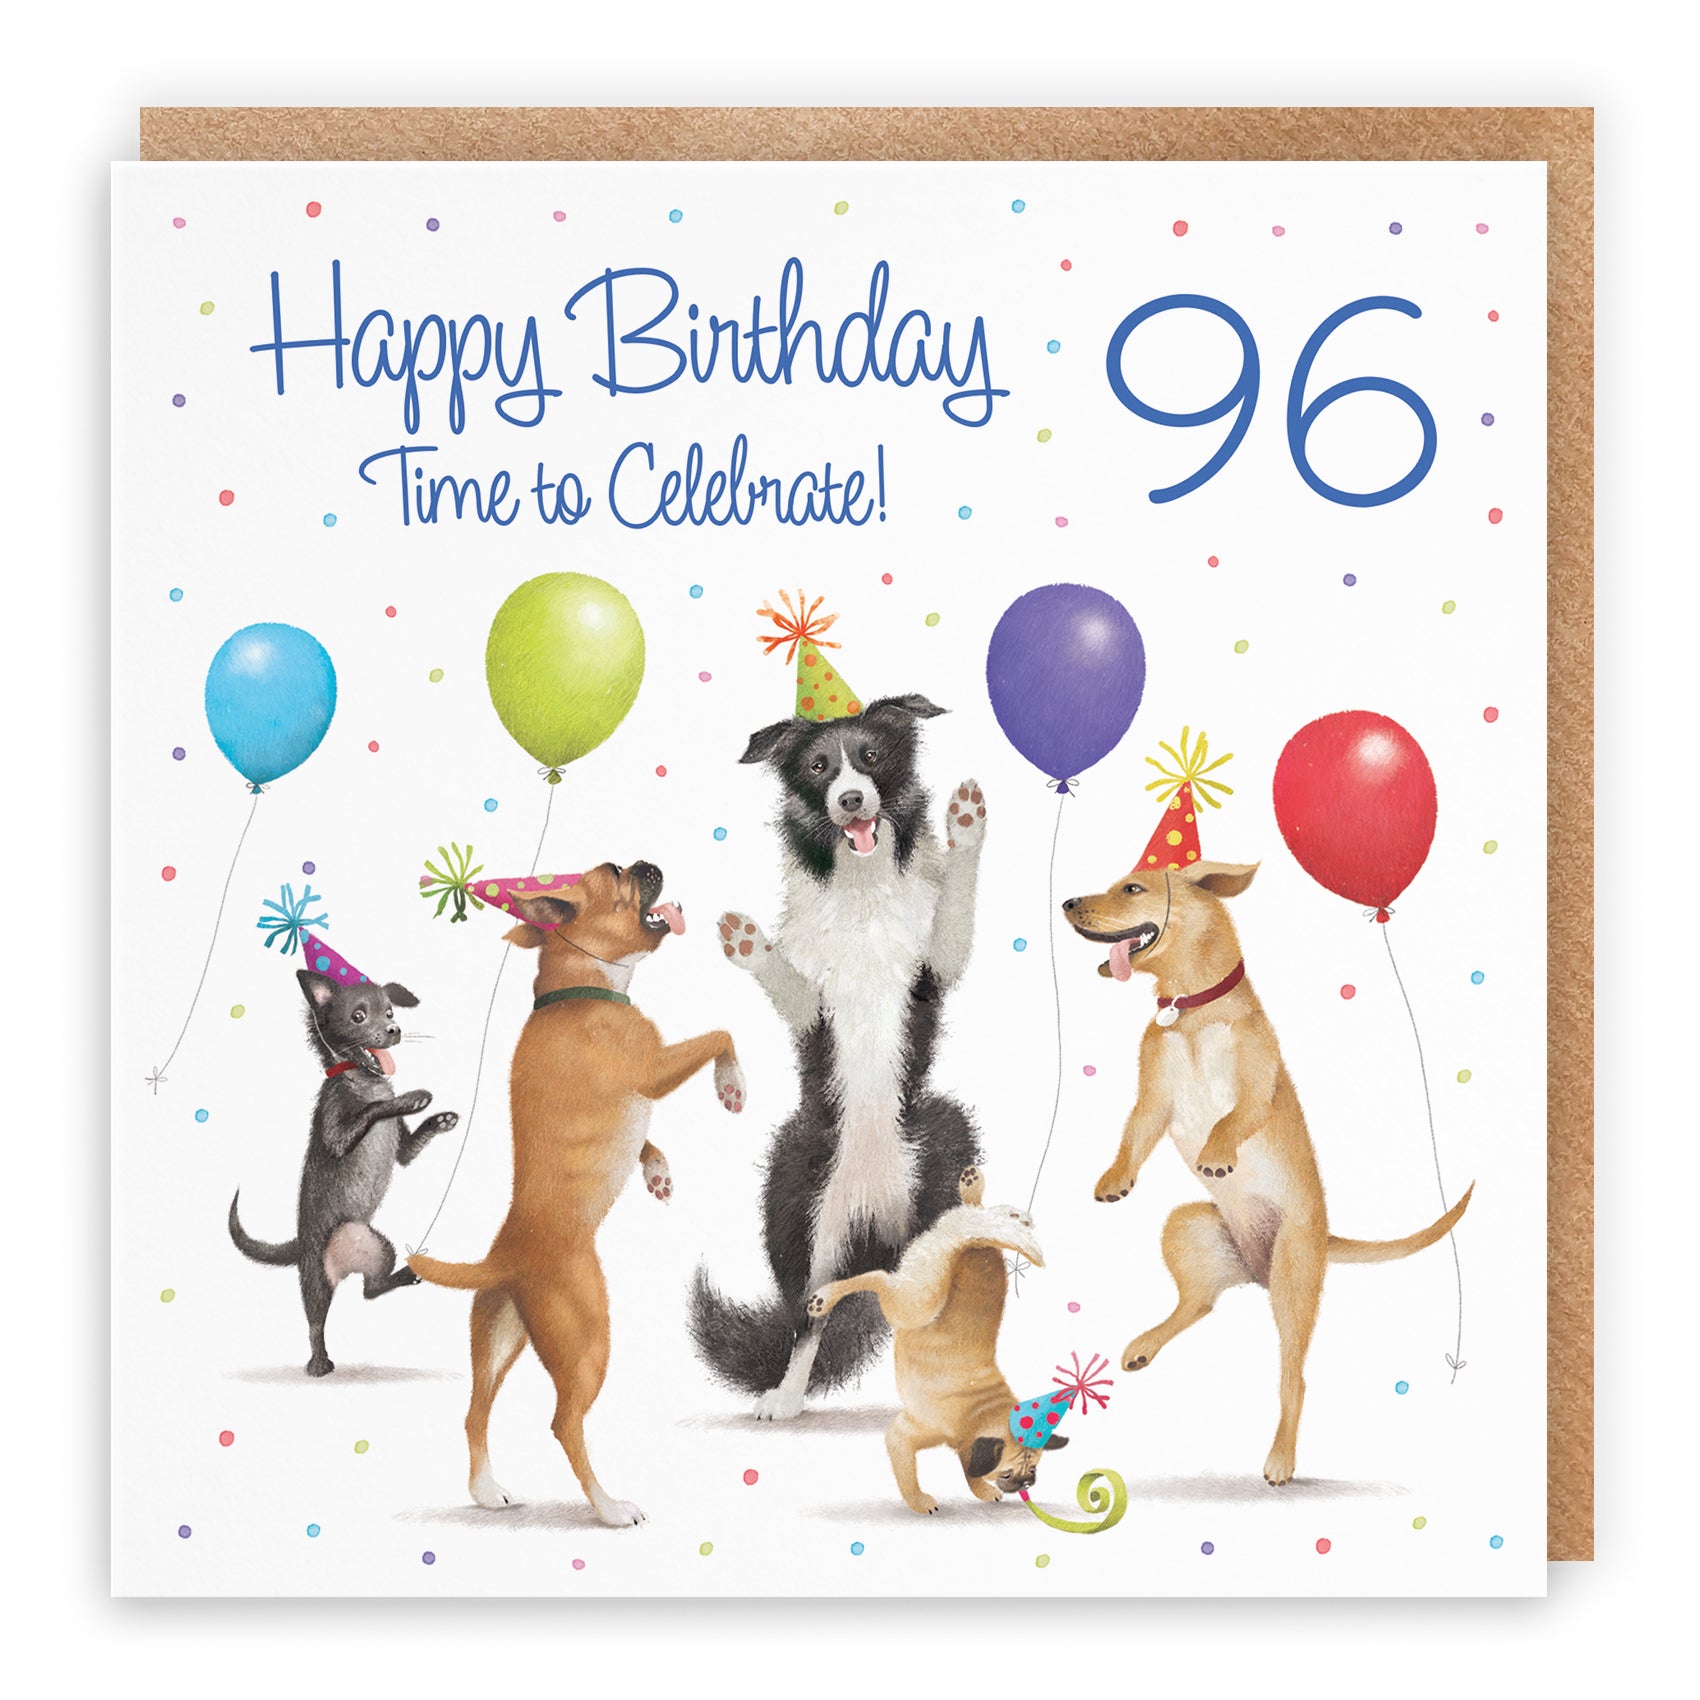 96th Birthday Cards - Age 96